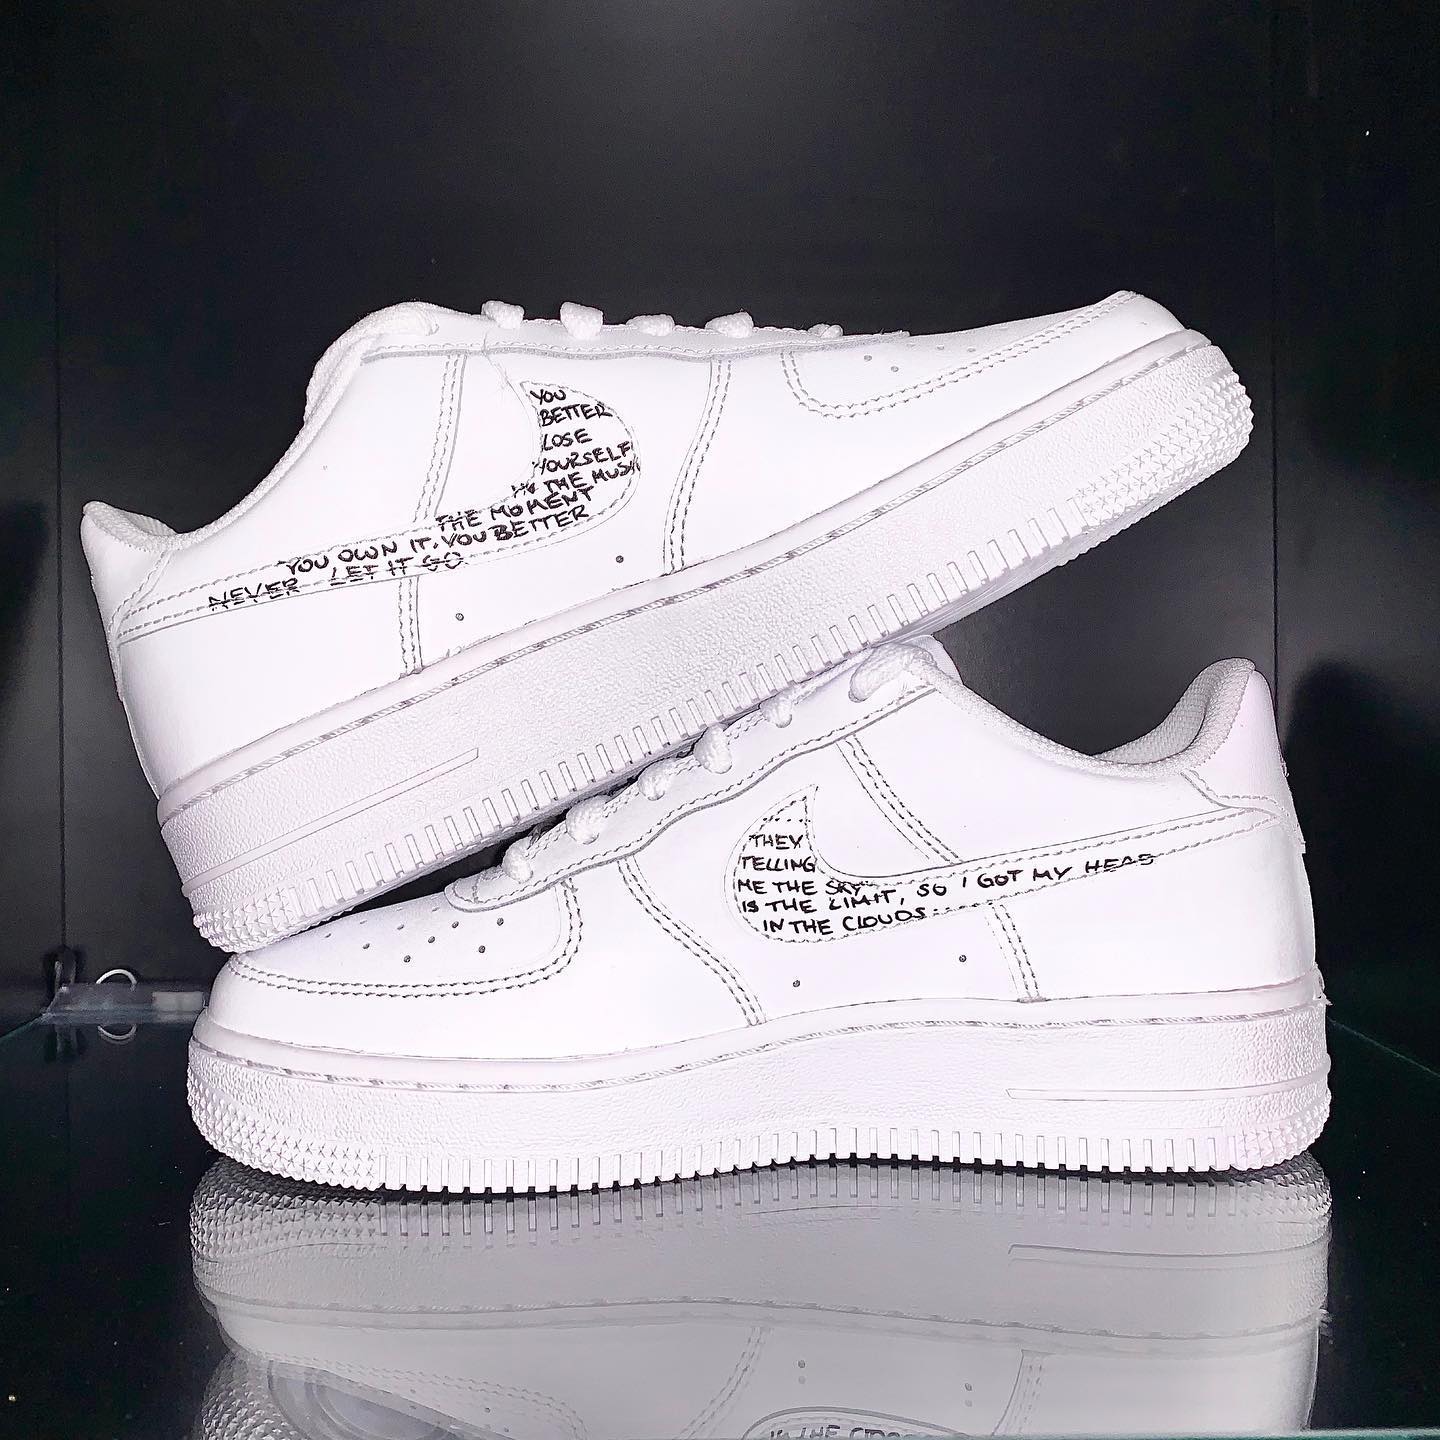 Eminem Air Force 1 Custom in 2023  Eminem, Sneakers fashion, Swag